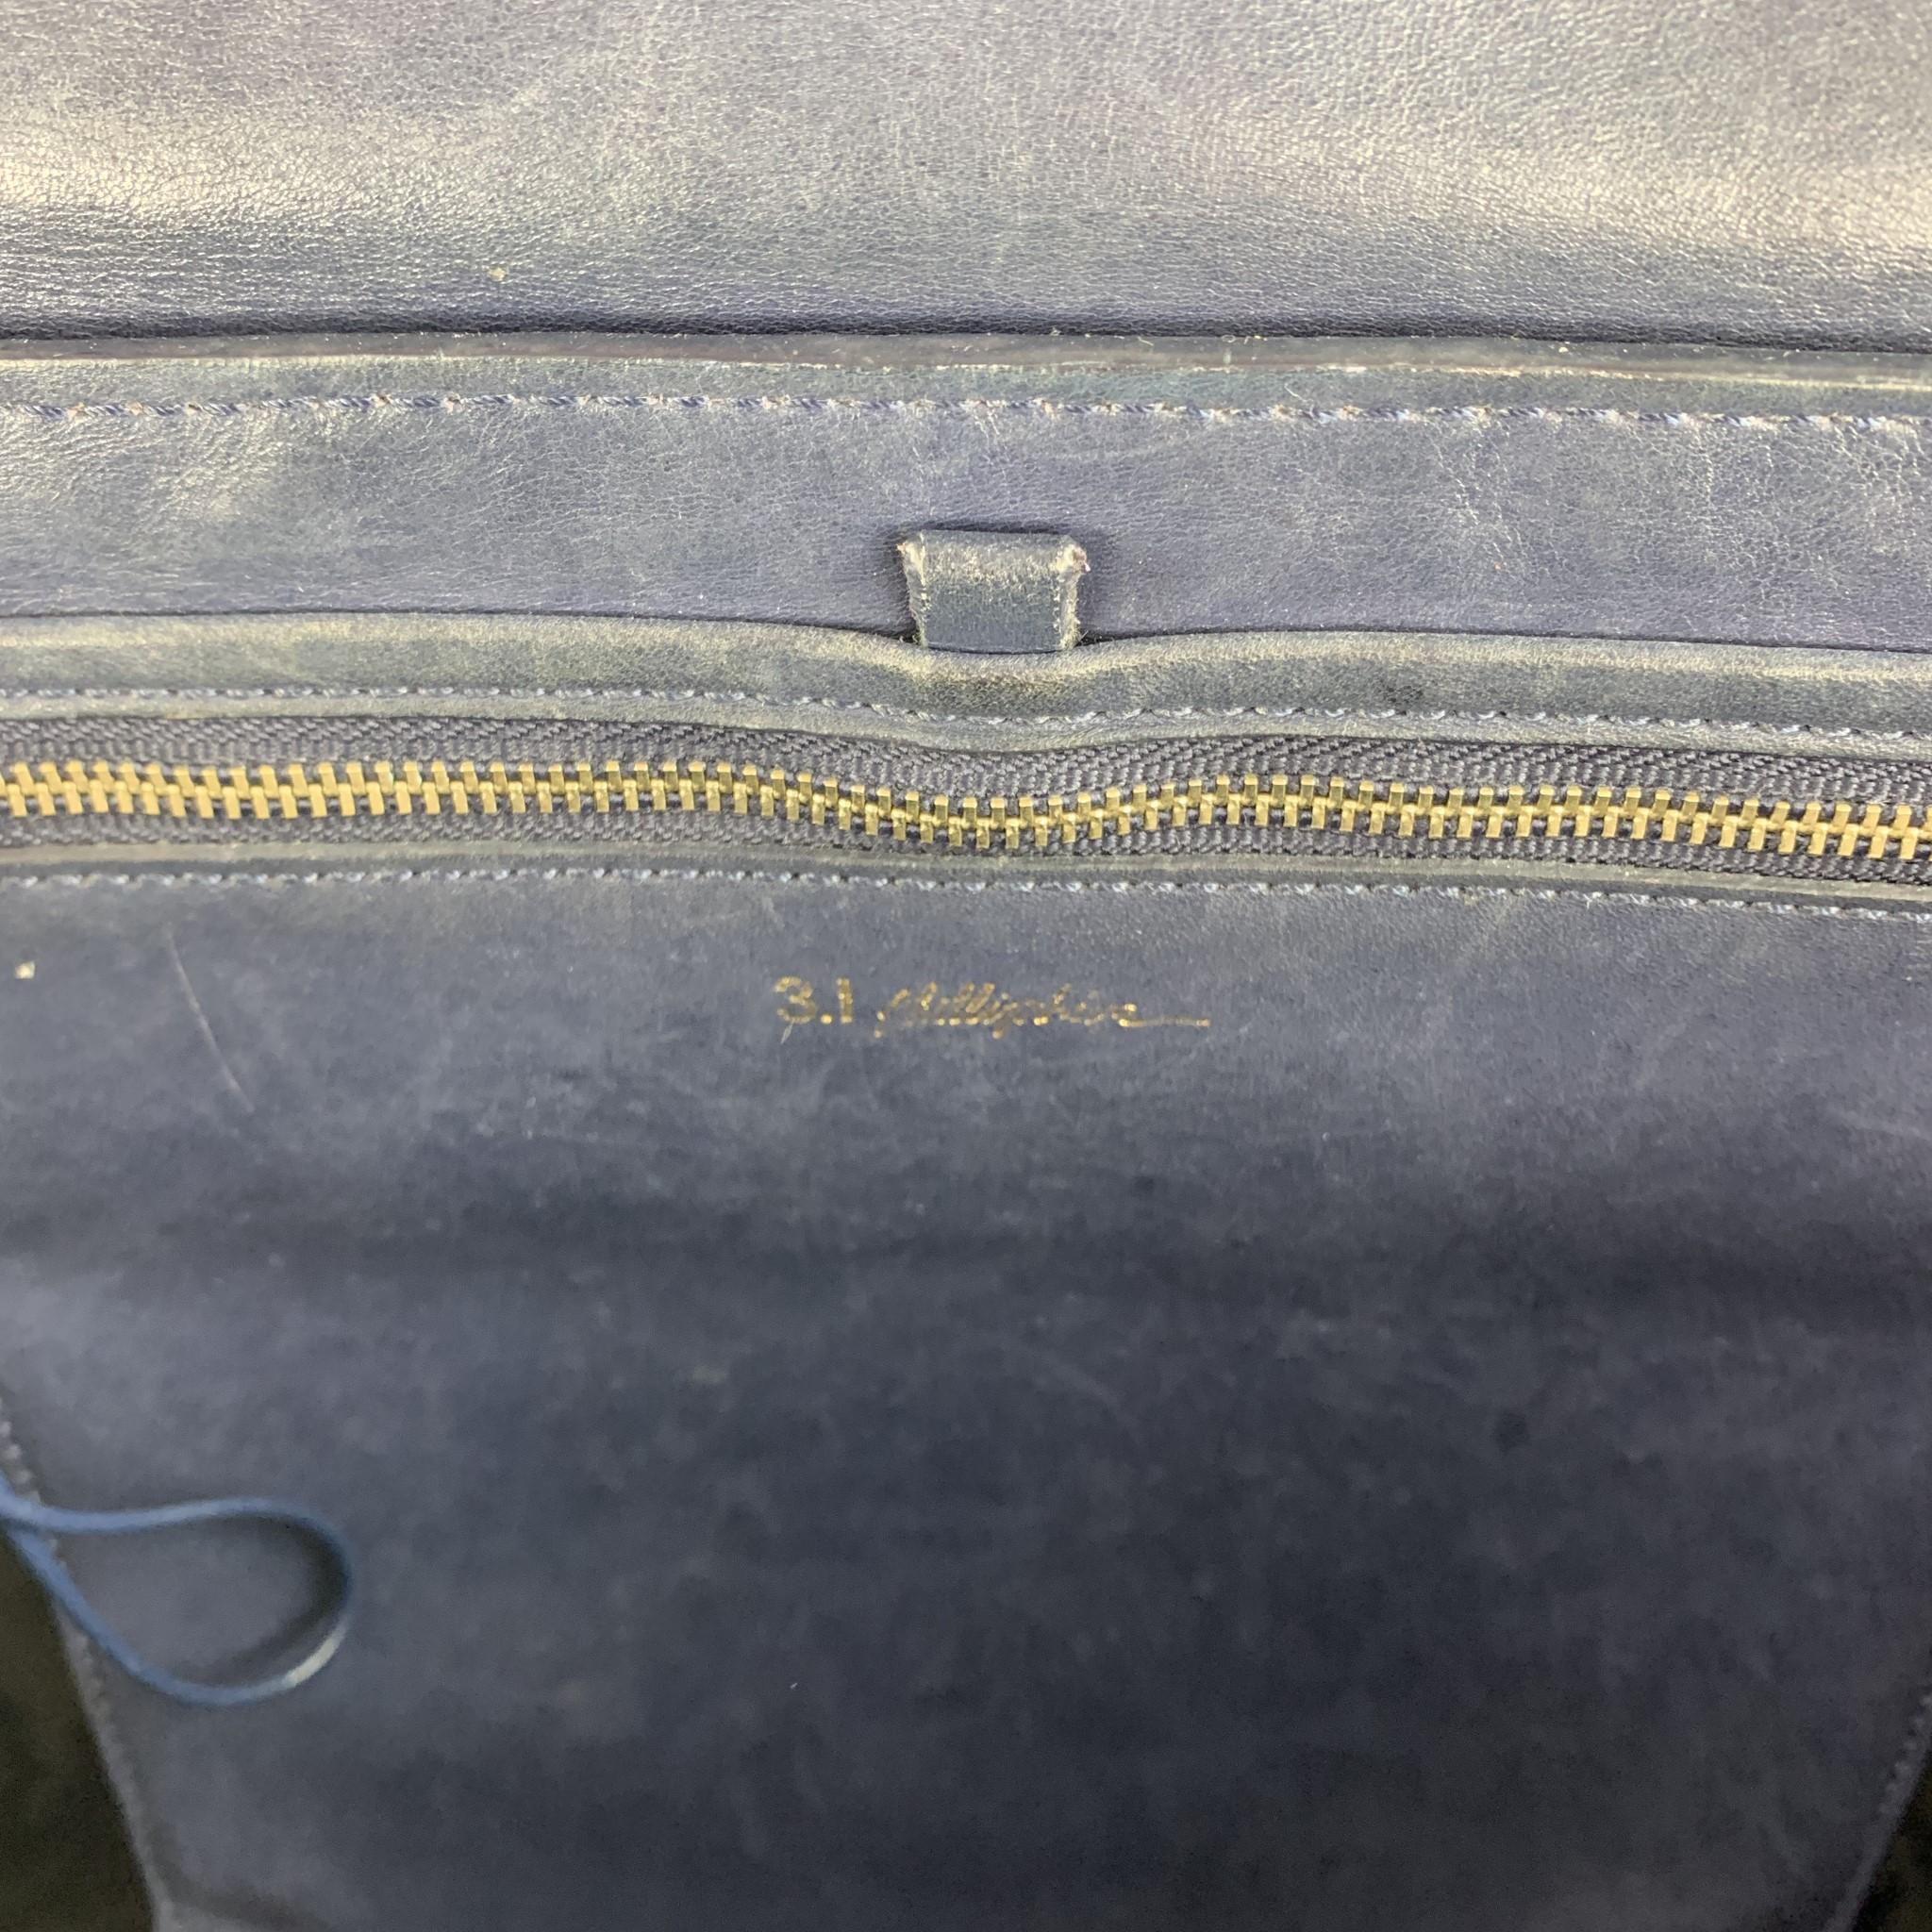 3.1 PHILLIP LIM Blue Soft leather Pashli Top Handles Handbag Bag  4